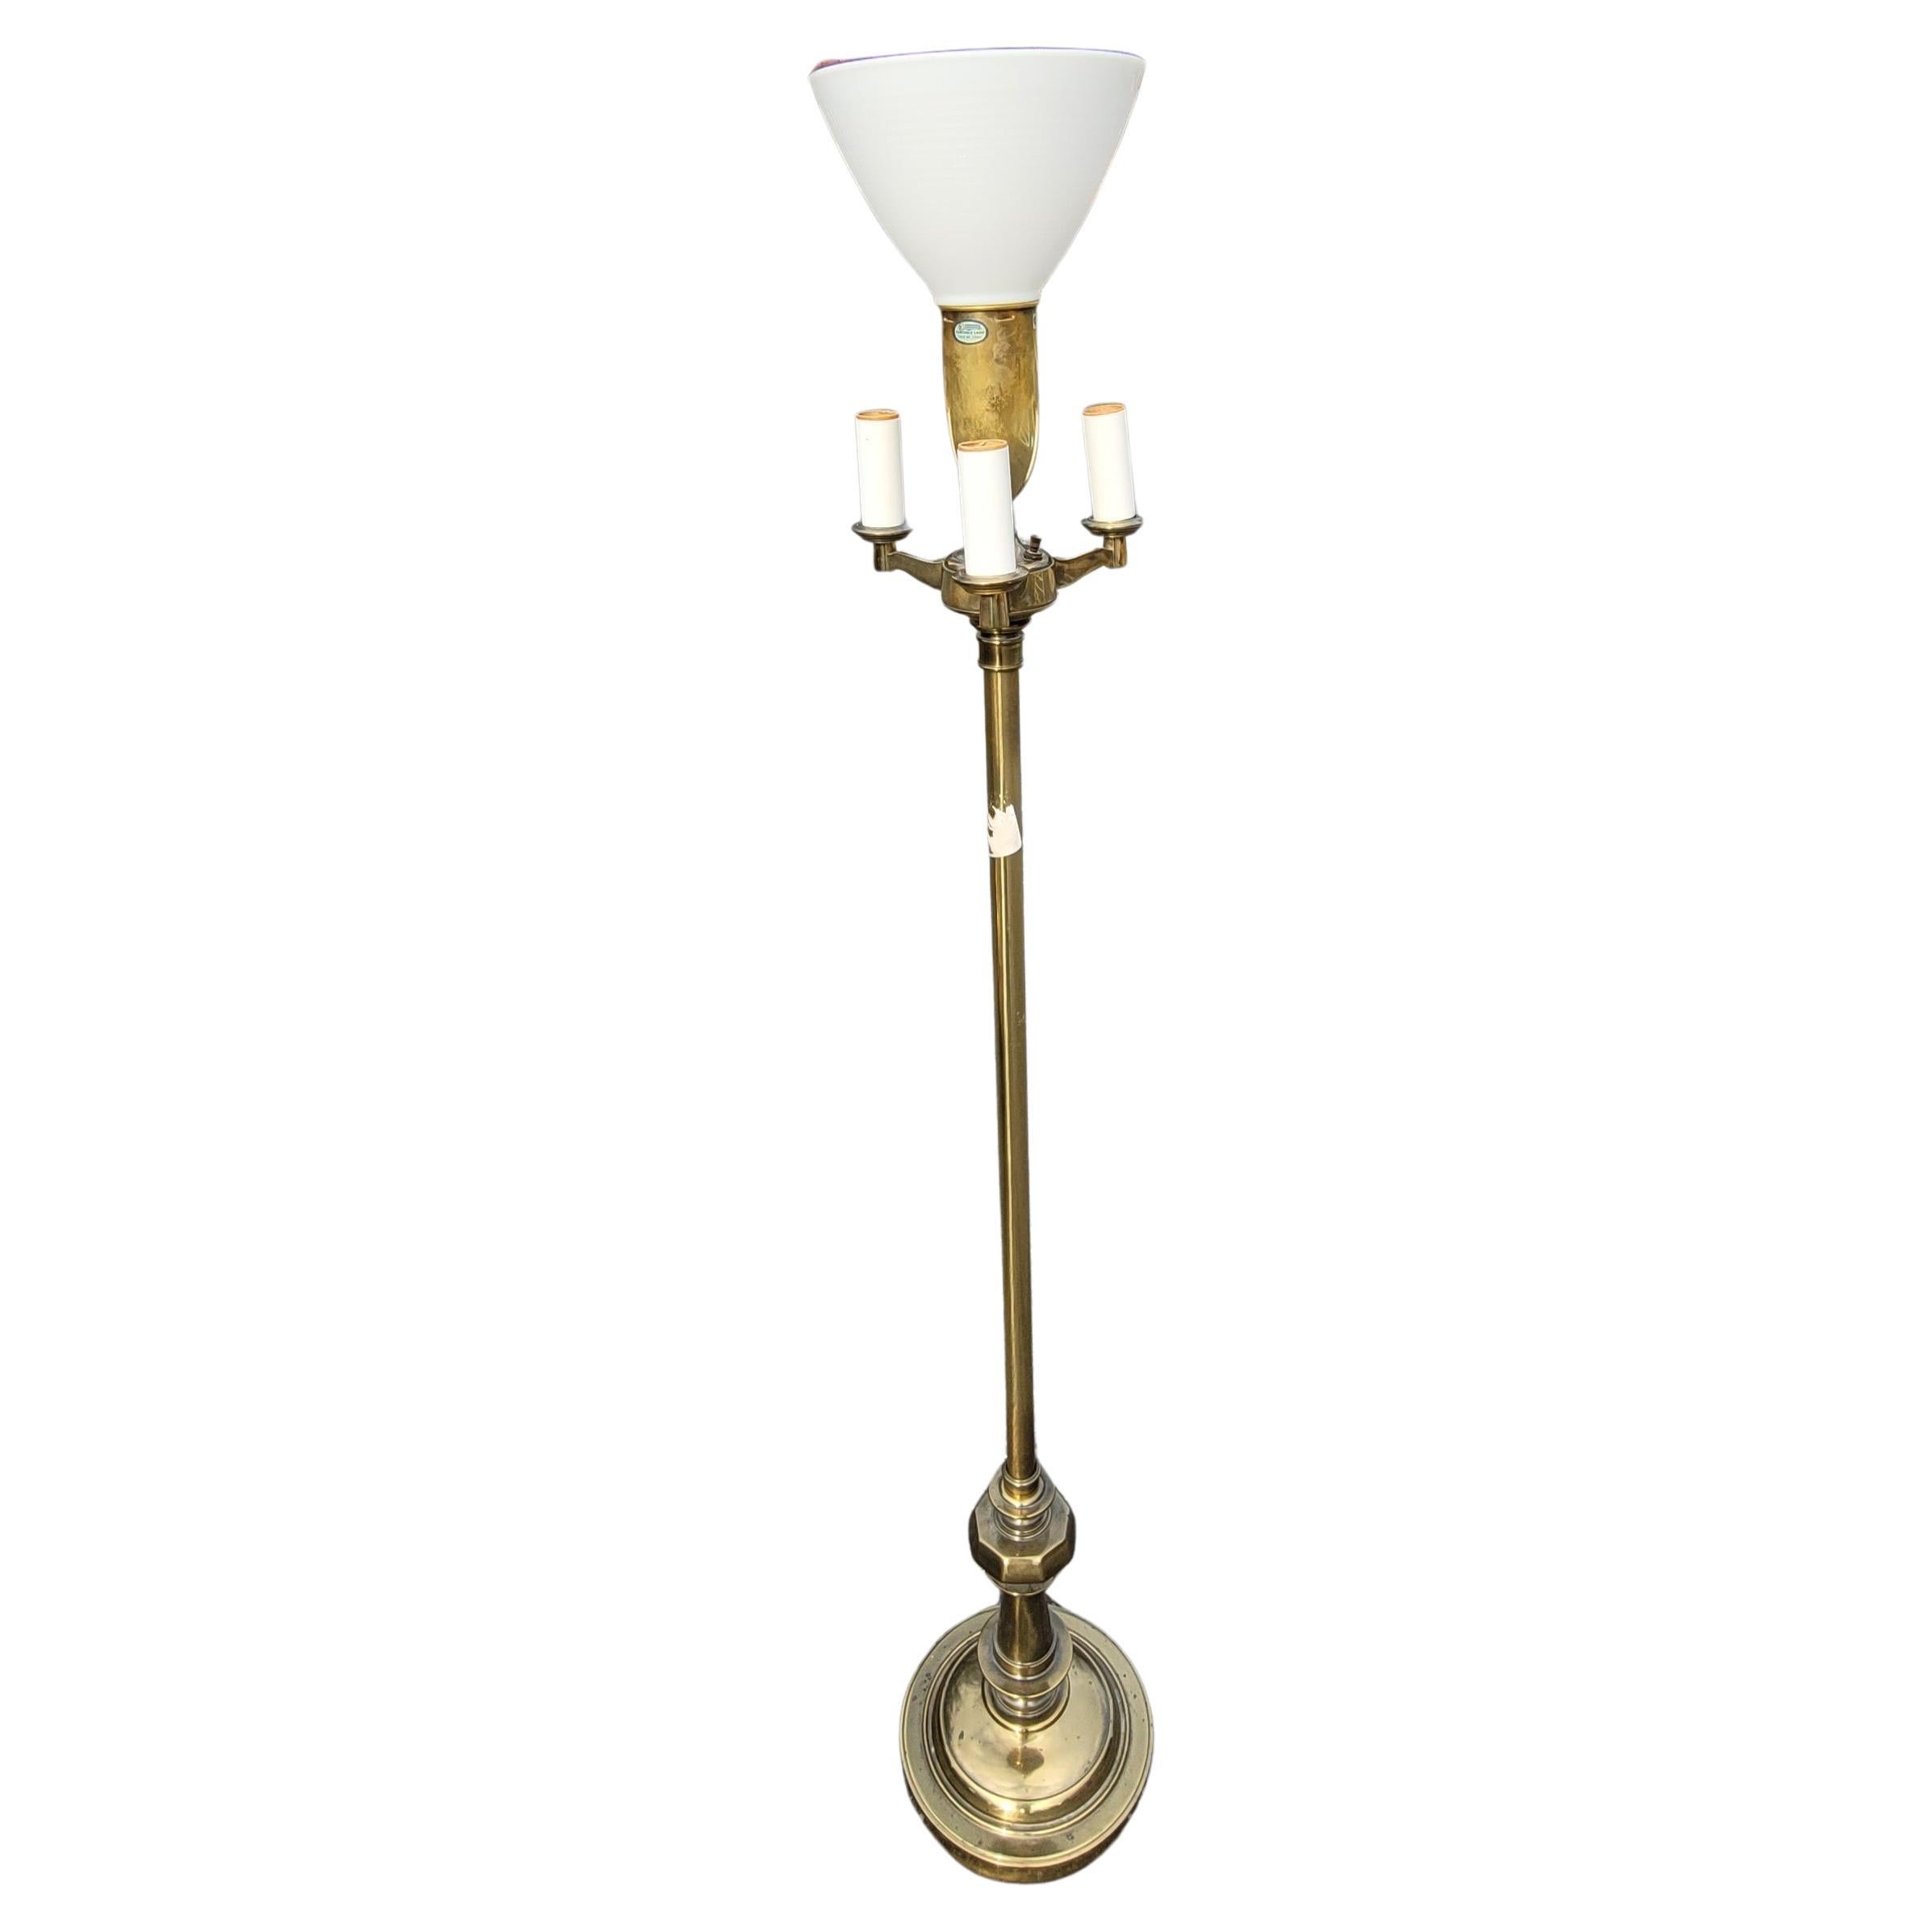 vintage Stiffel solid brass table lamp, three way Stiffel torch flame lamp